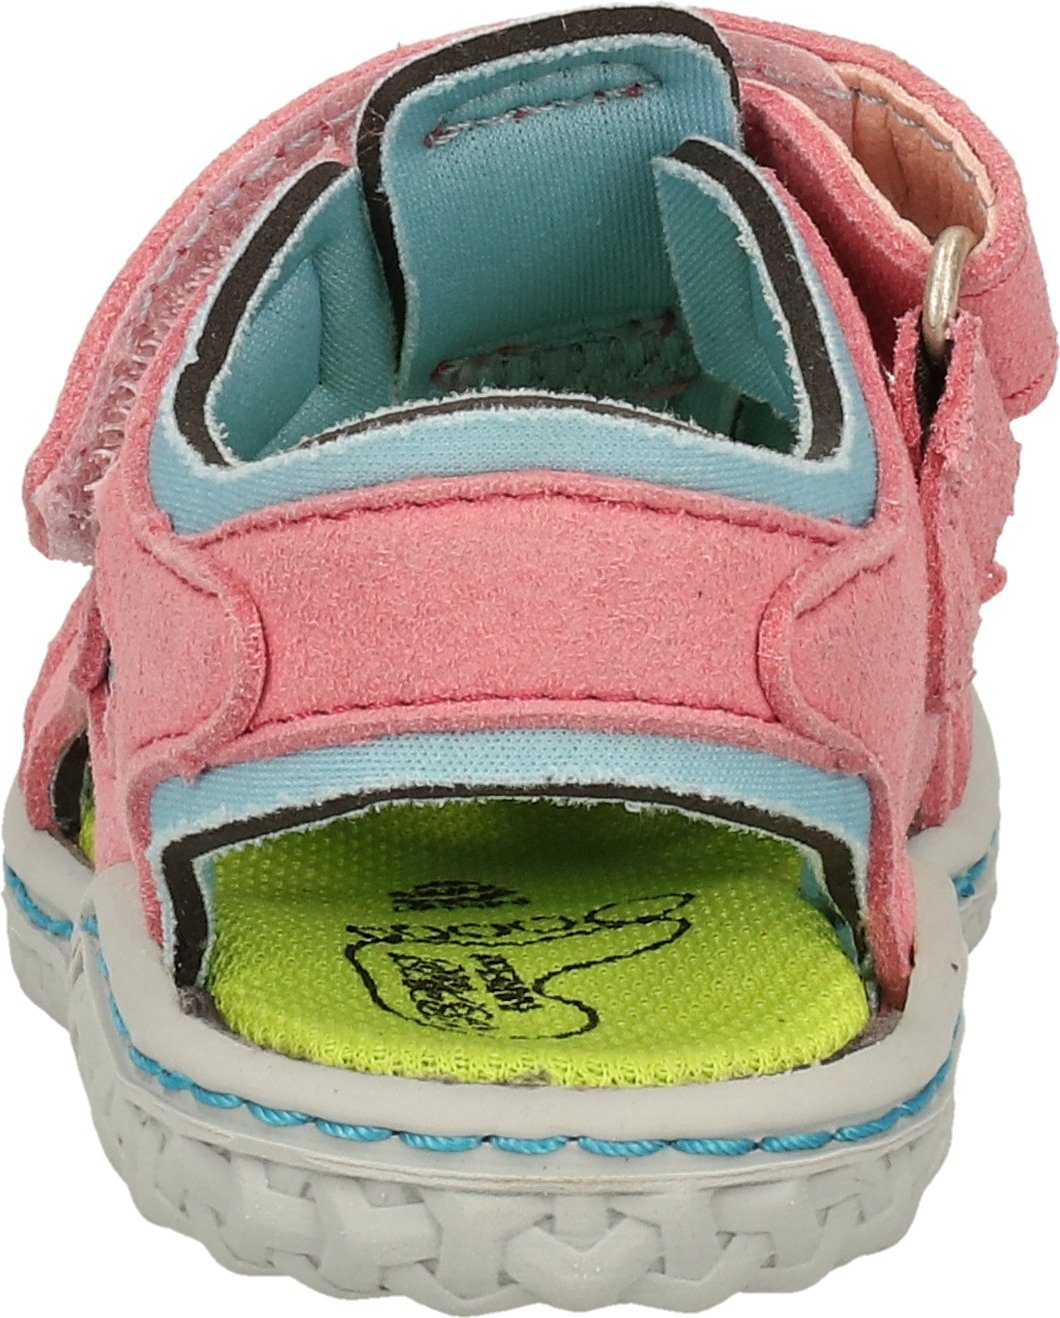 Schuhe Babyschuhe Mädchen Pepino Halbschuhe Lederimitat/Textil Lauflernschuh